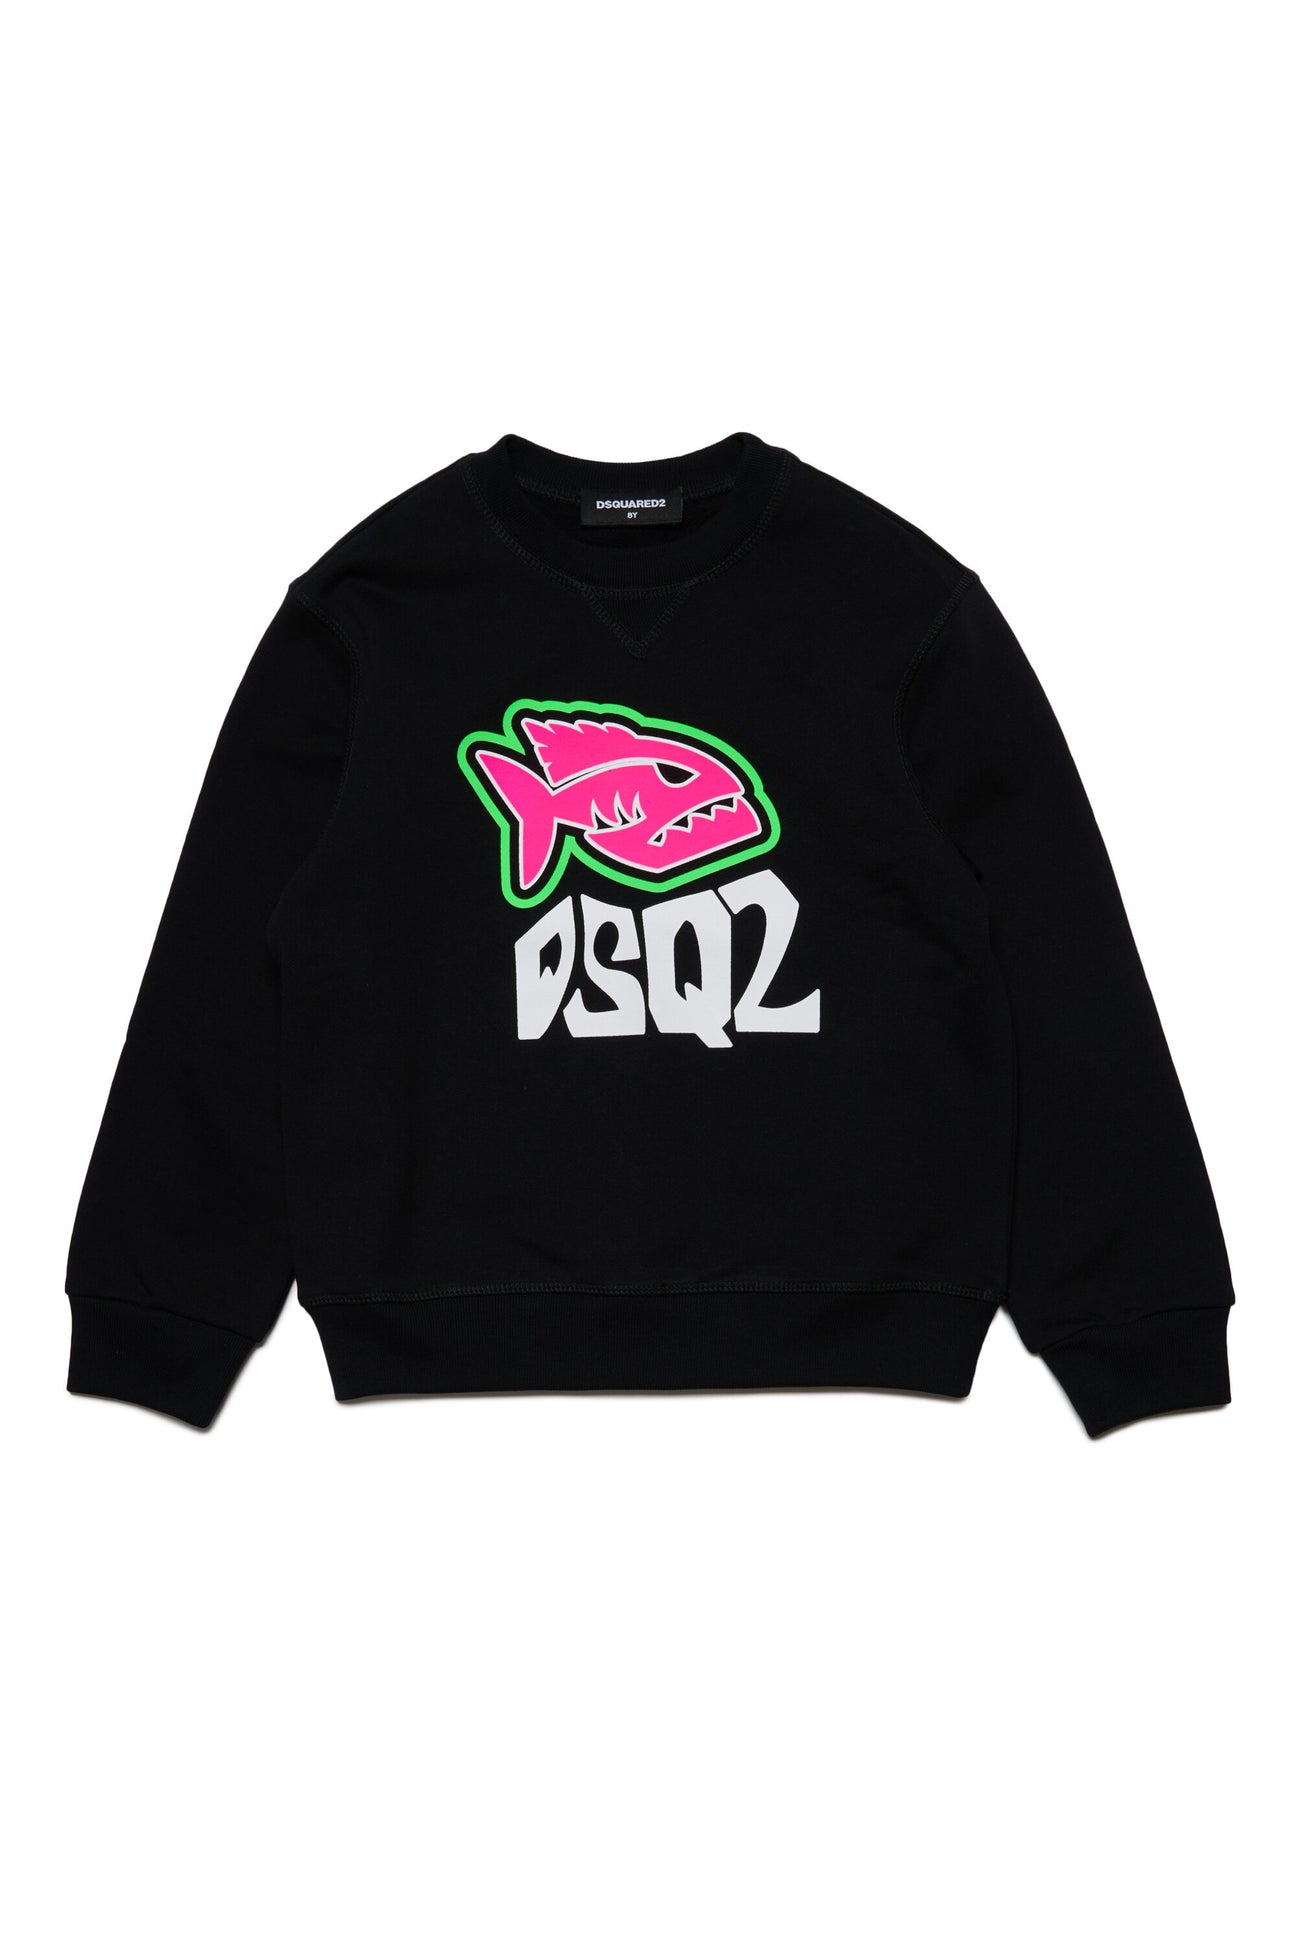 Dsquared2 Kids logo-print cotton sweatshirt